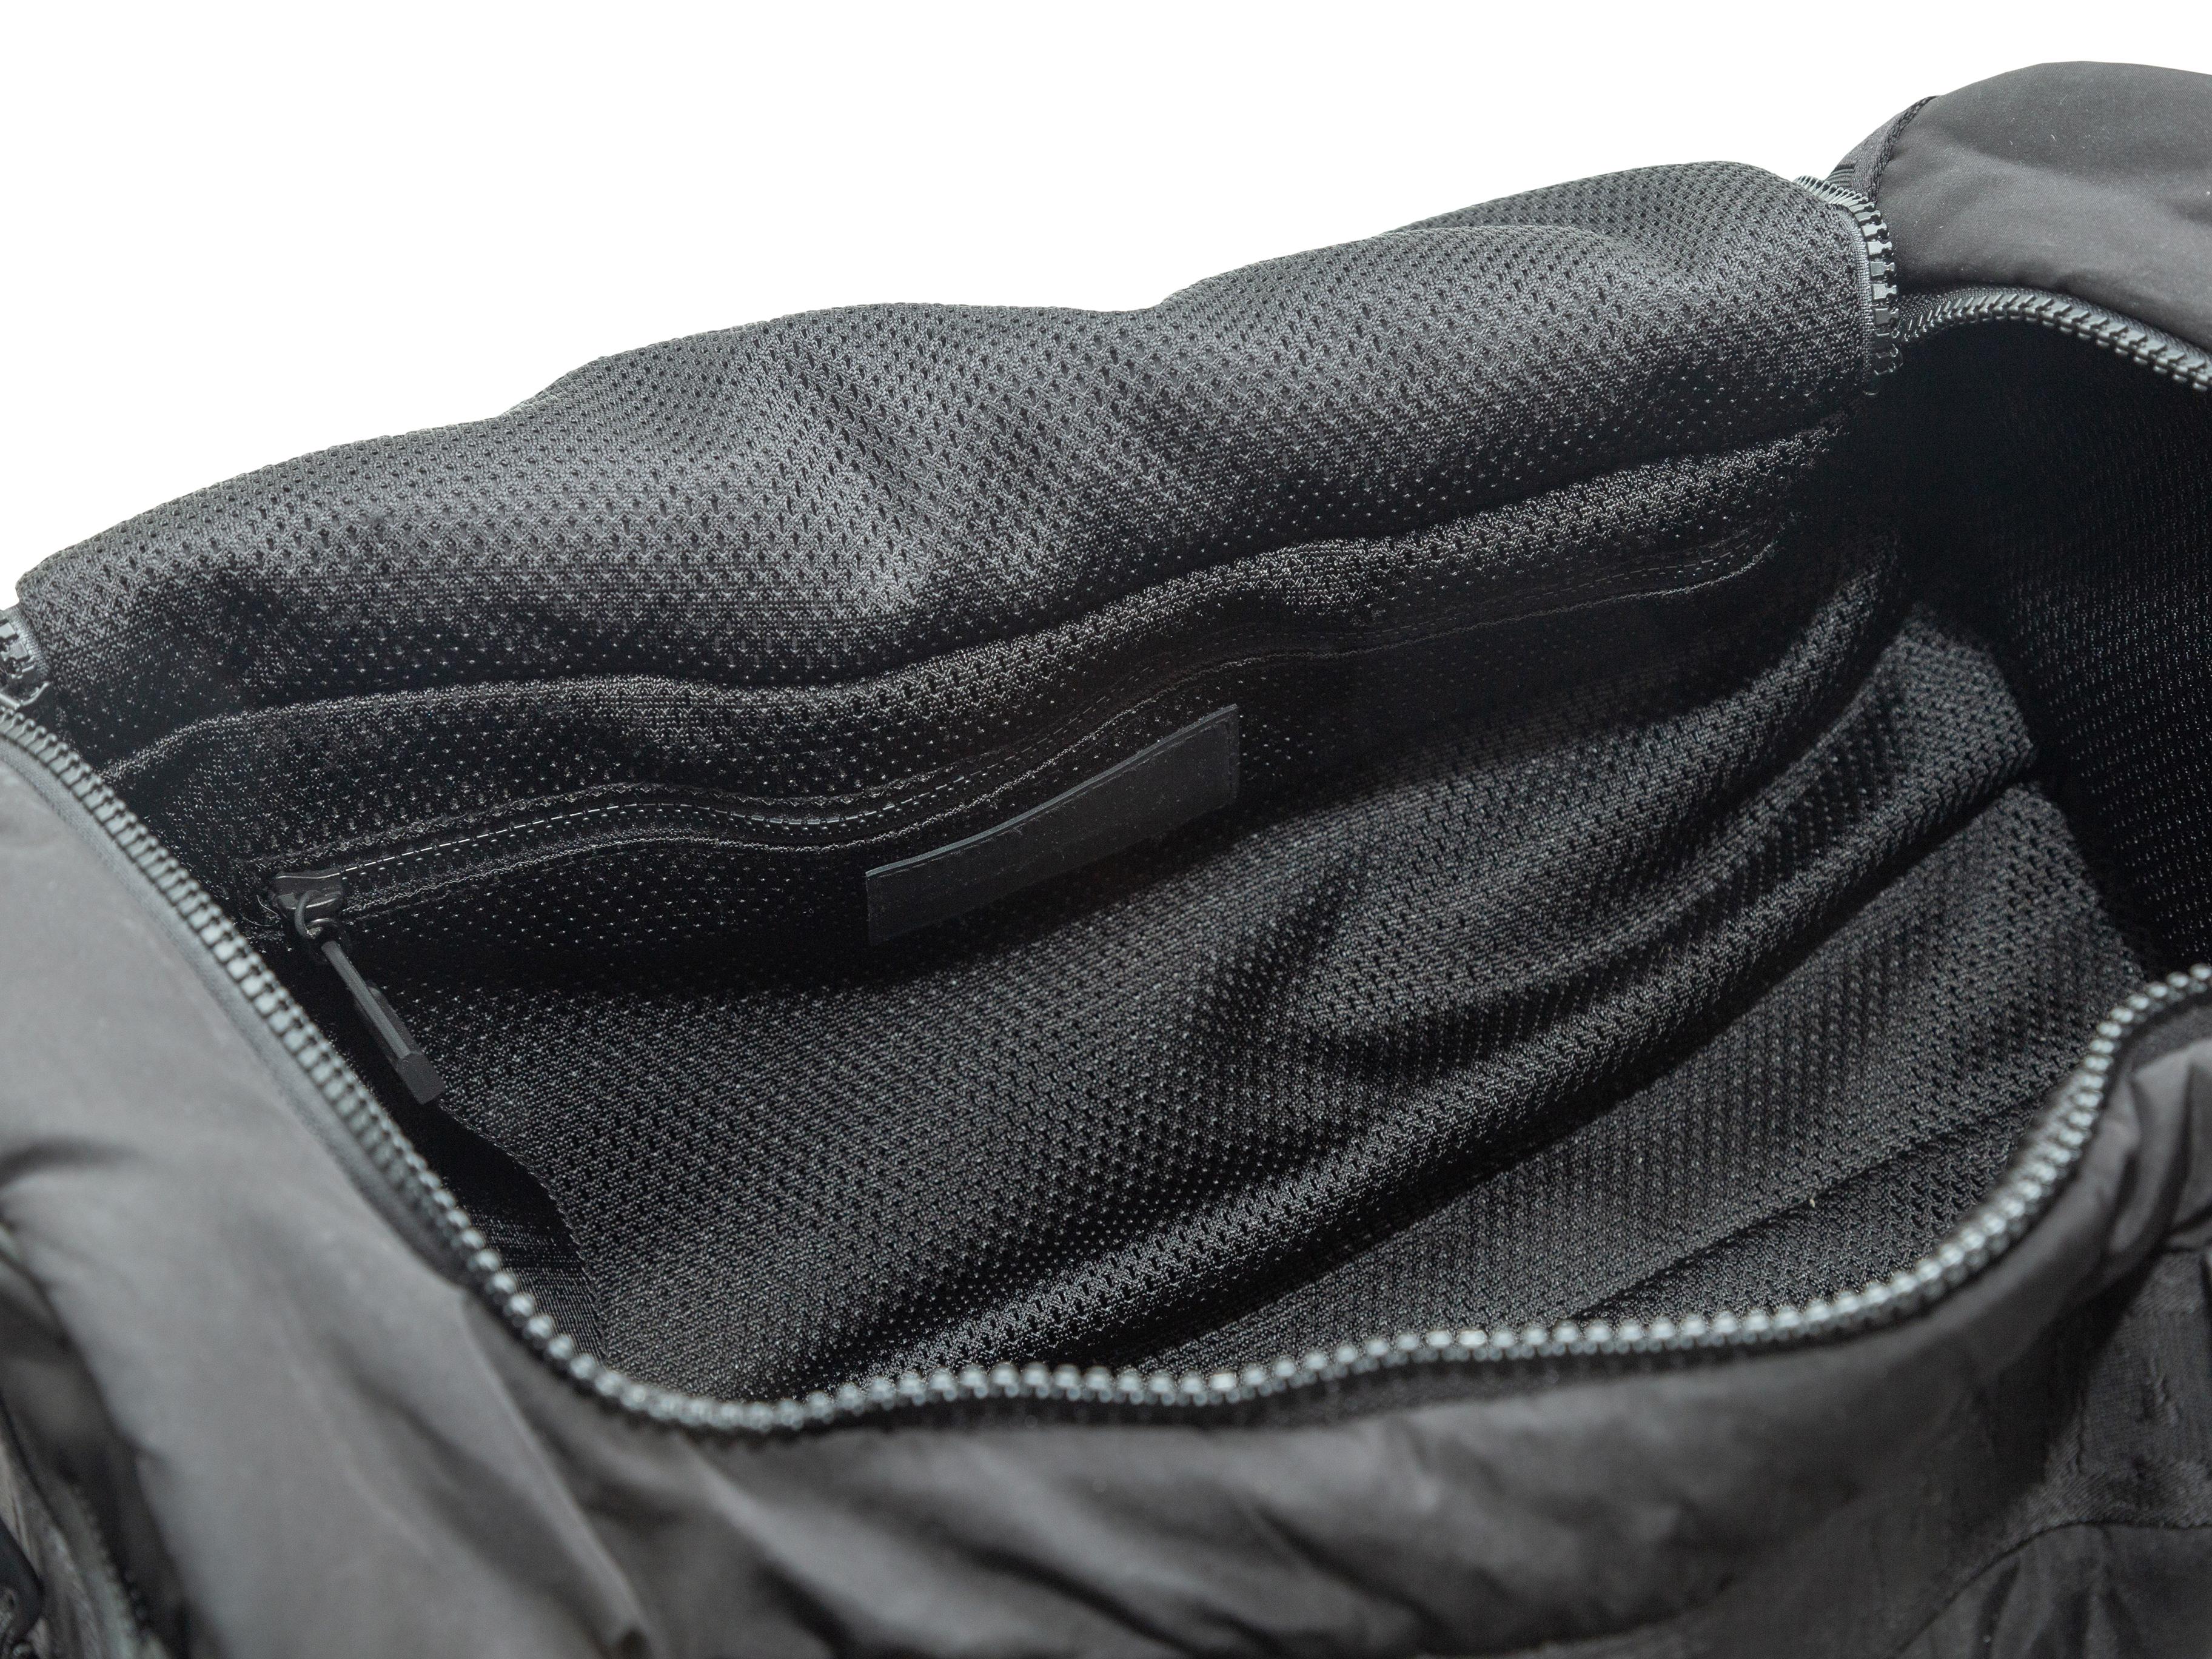 Product Details: Black nylon duffel bag by Alexander Wang. Interior zip pocket. Dual handles. Detachable shoulder strap. Zip closure at top. 17